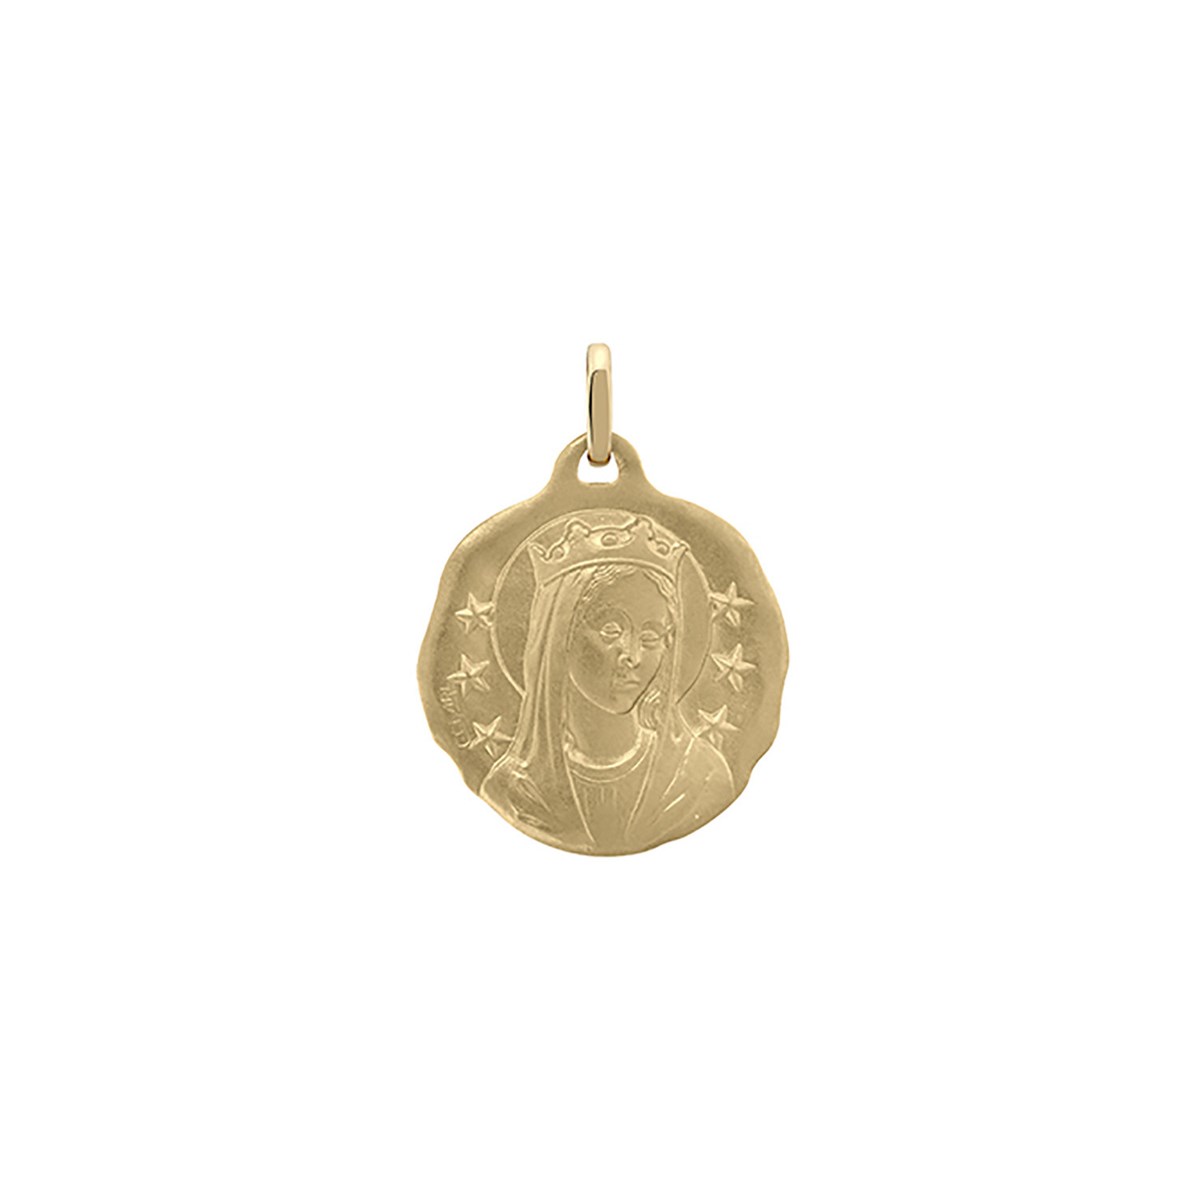 Médaille ronde vierge couronnée or jaune 18 carats